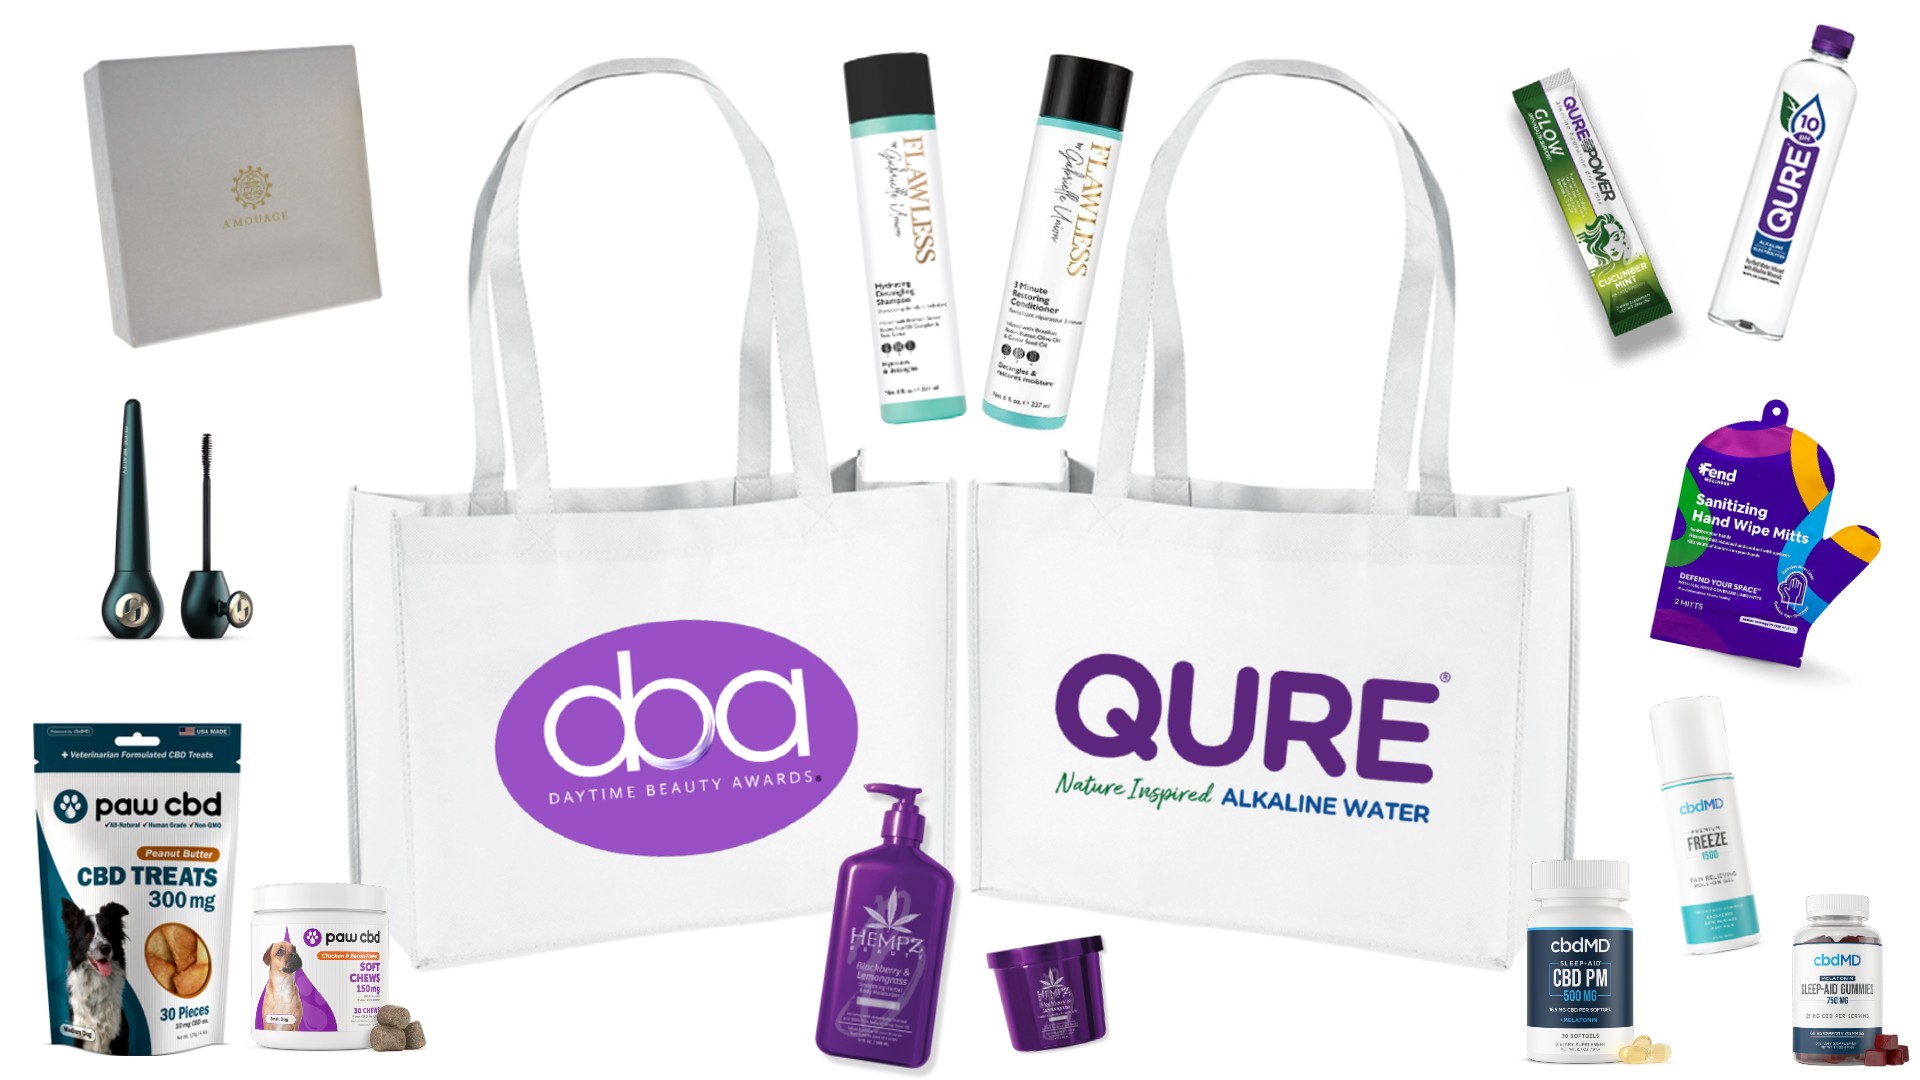 daytime beauty awards gift bag, fend wellness hand mitt, amouage, flawless, cbdmd, qure water